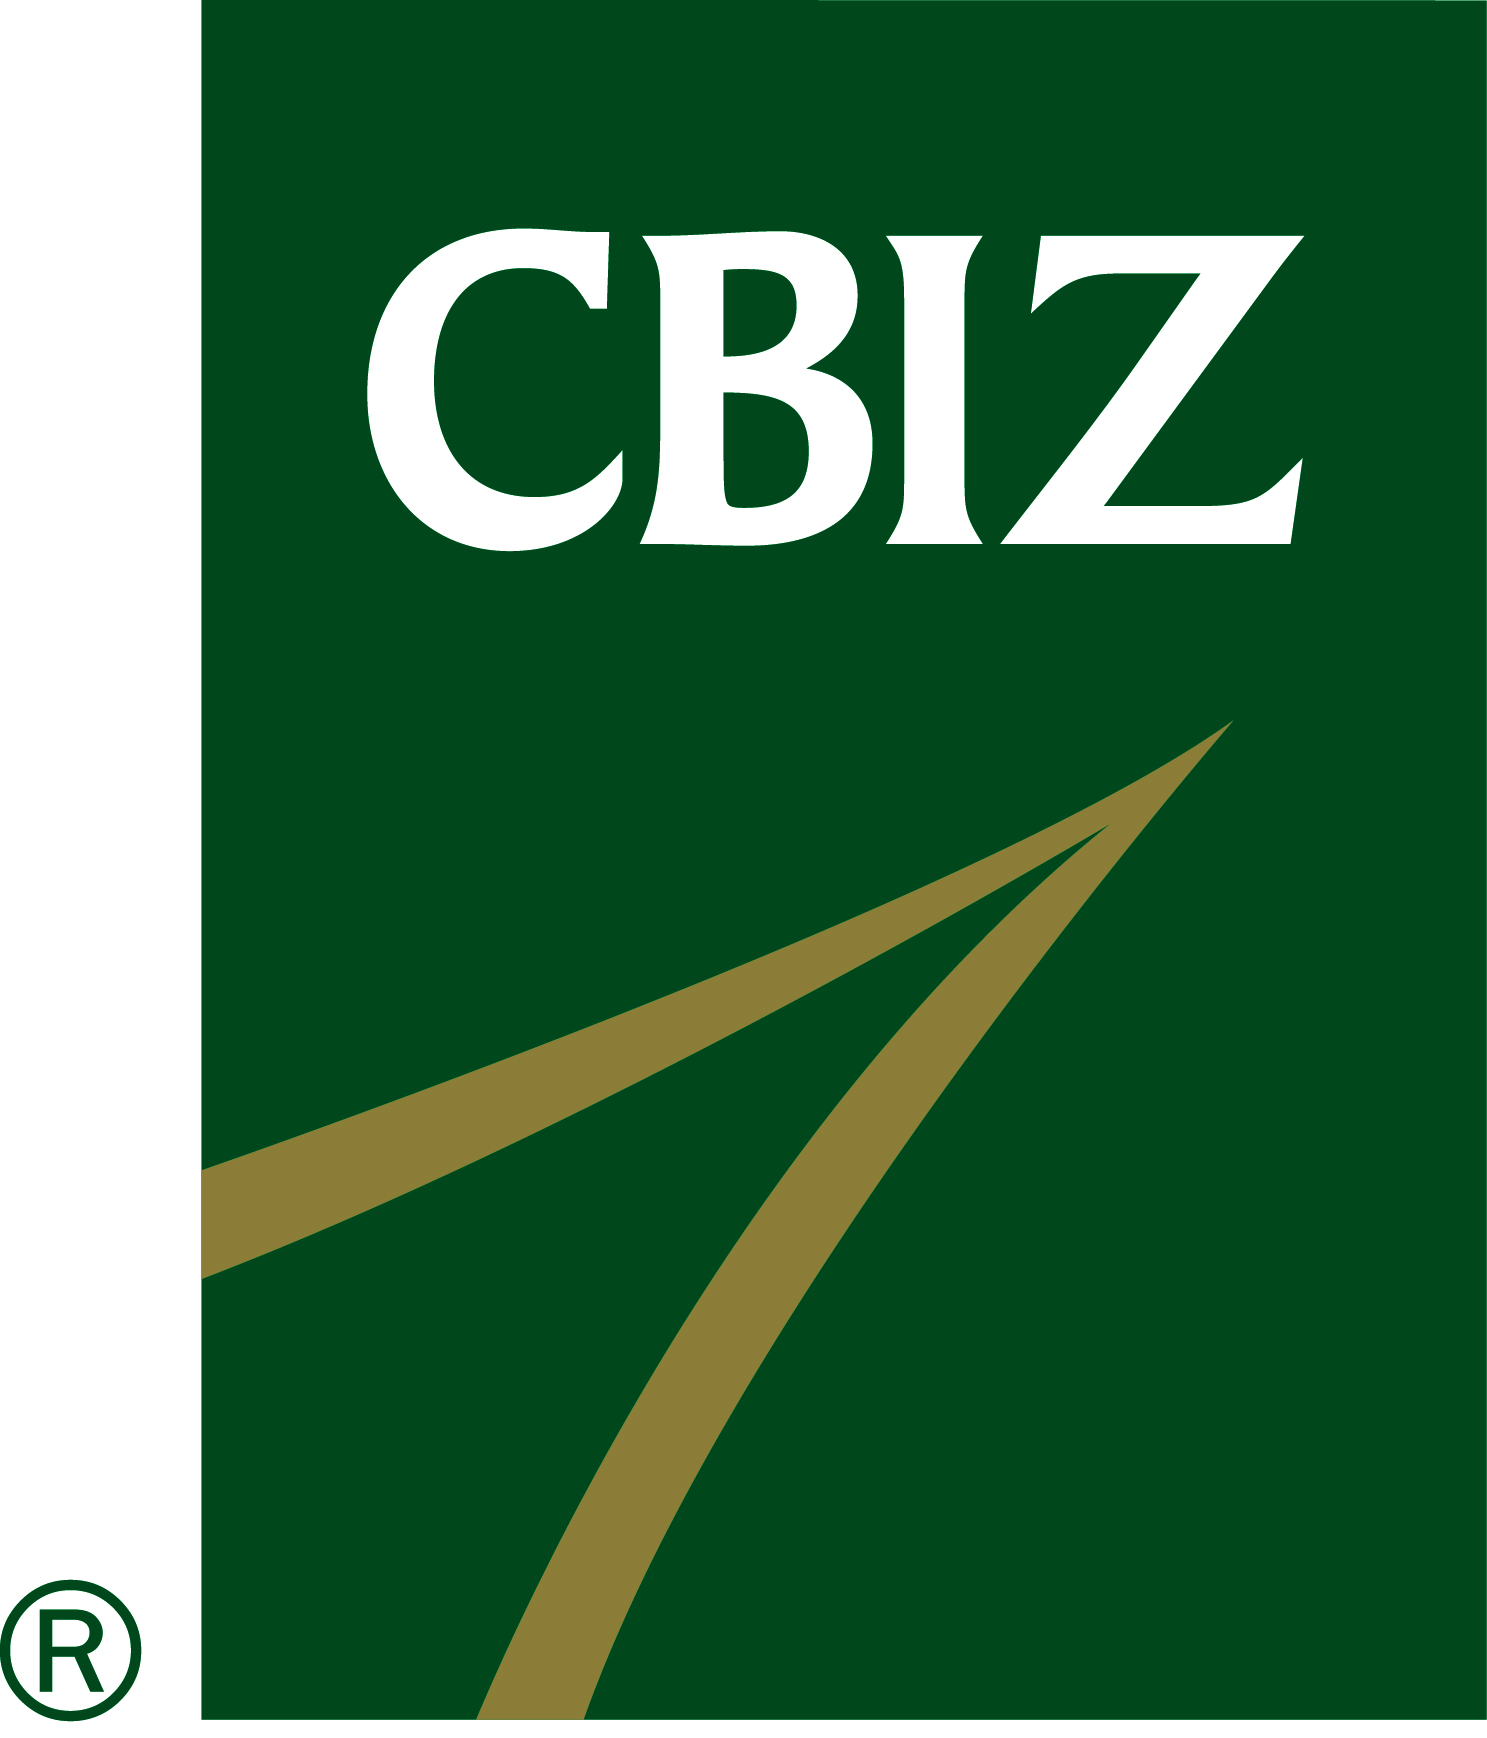 CBIZ KA Consulting Services, LLC